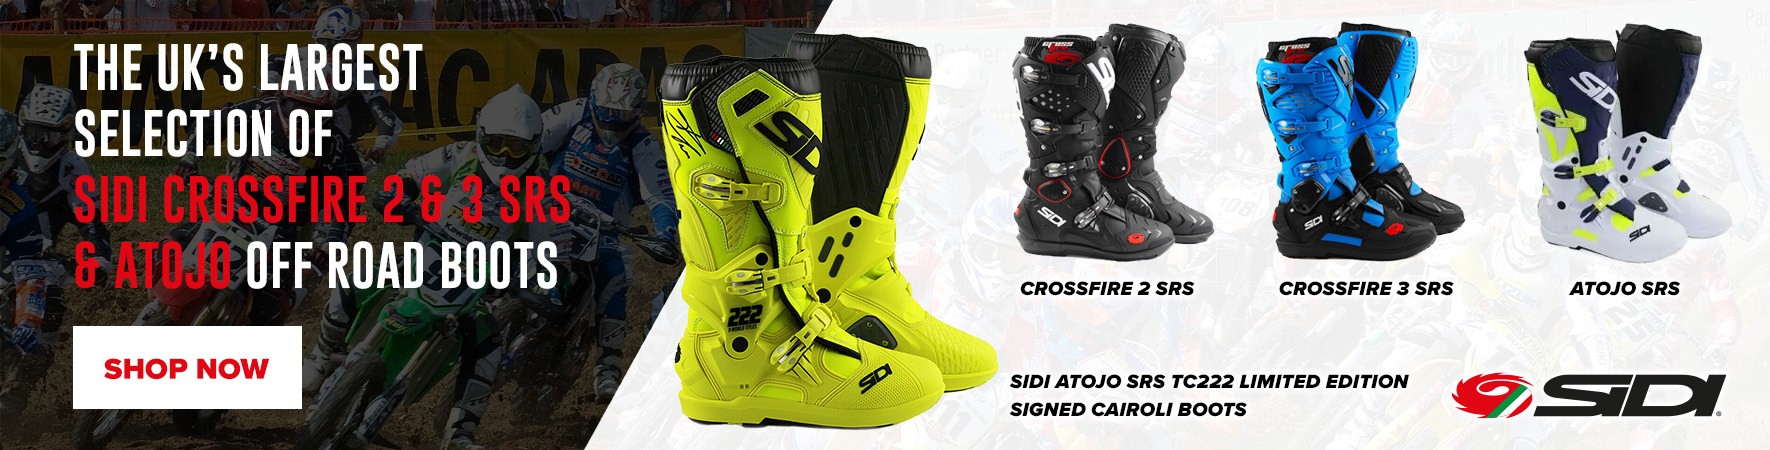 Sidi Crossfire 2 and 3 and Atojo MX Boots